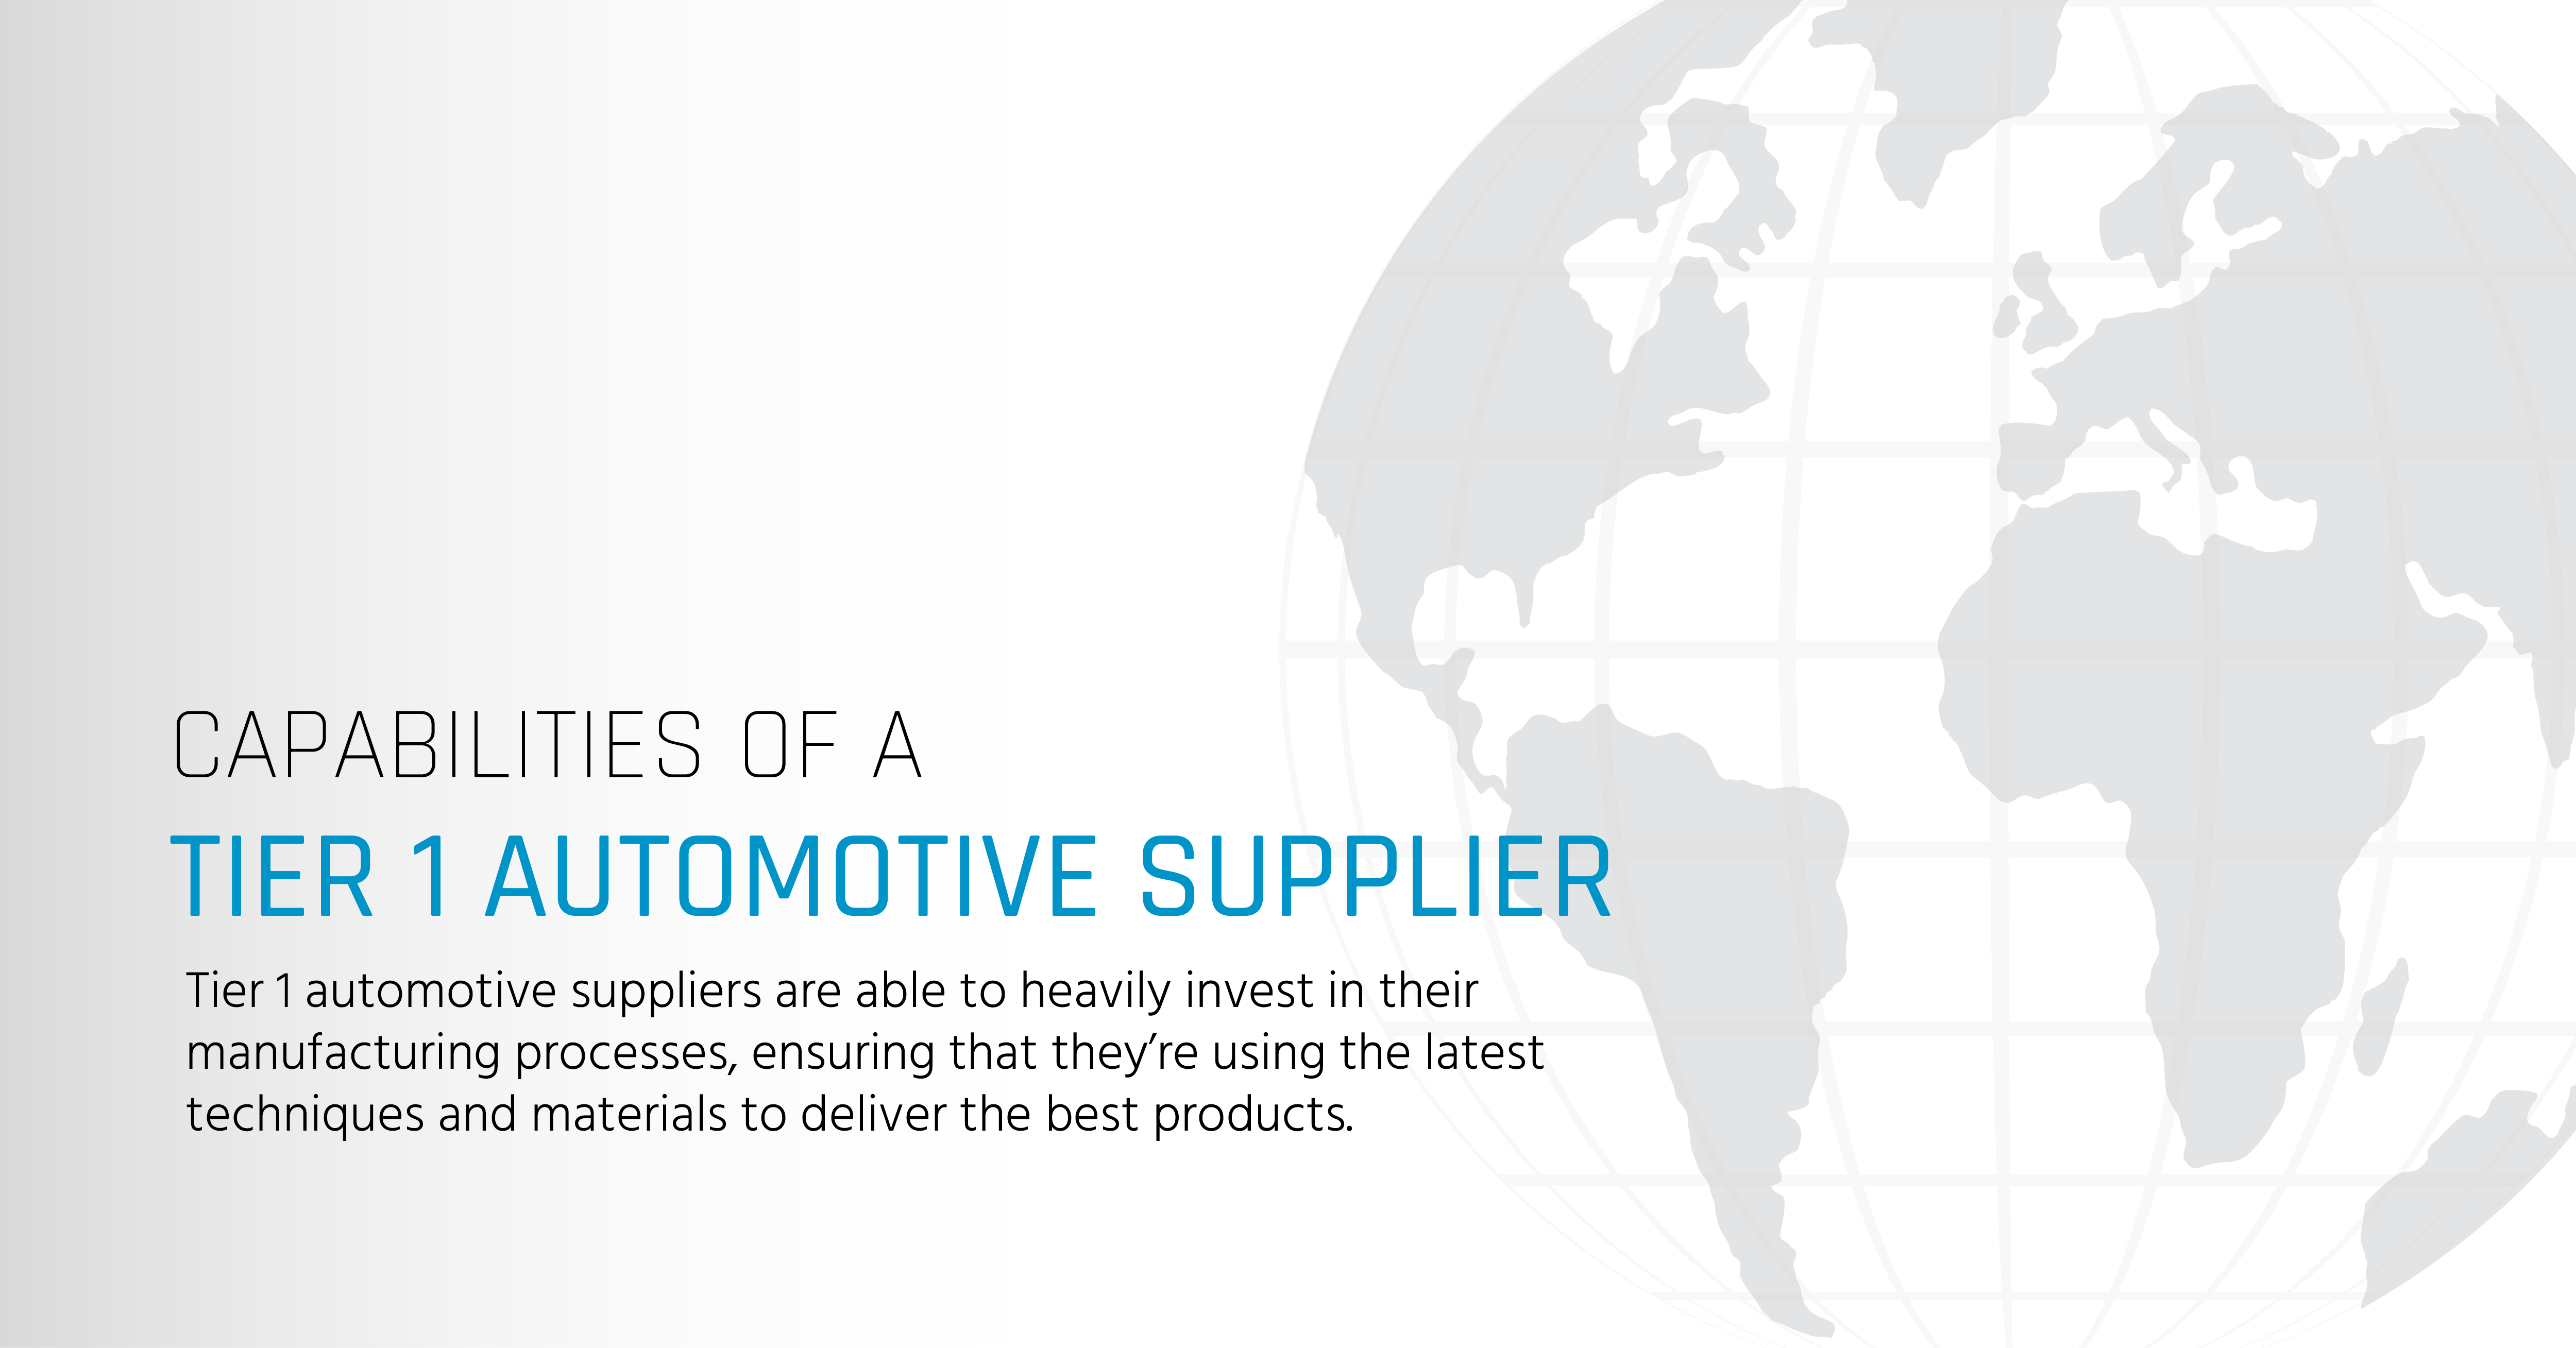 Tier 1 Automotive Suppliers Provide Parts for Top Car Companies